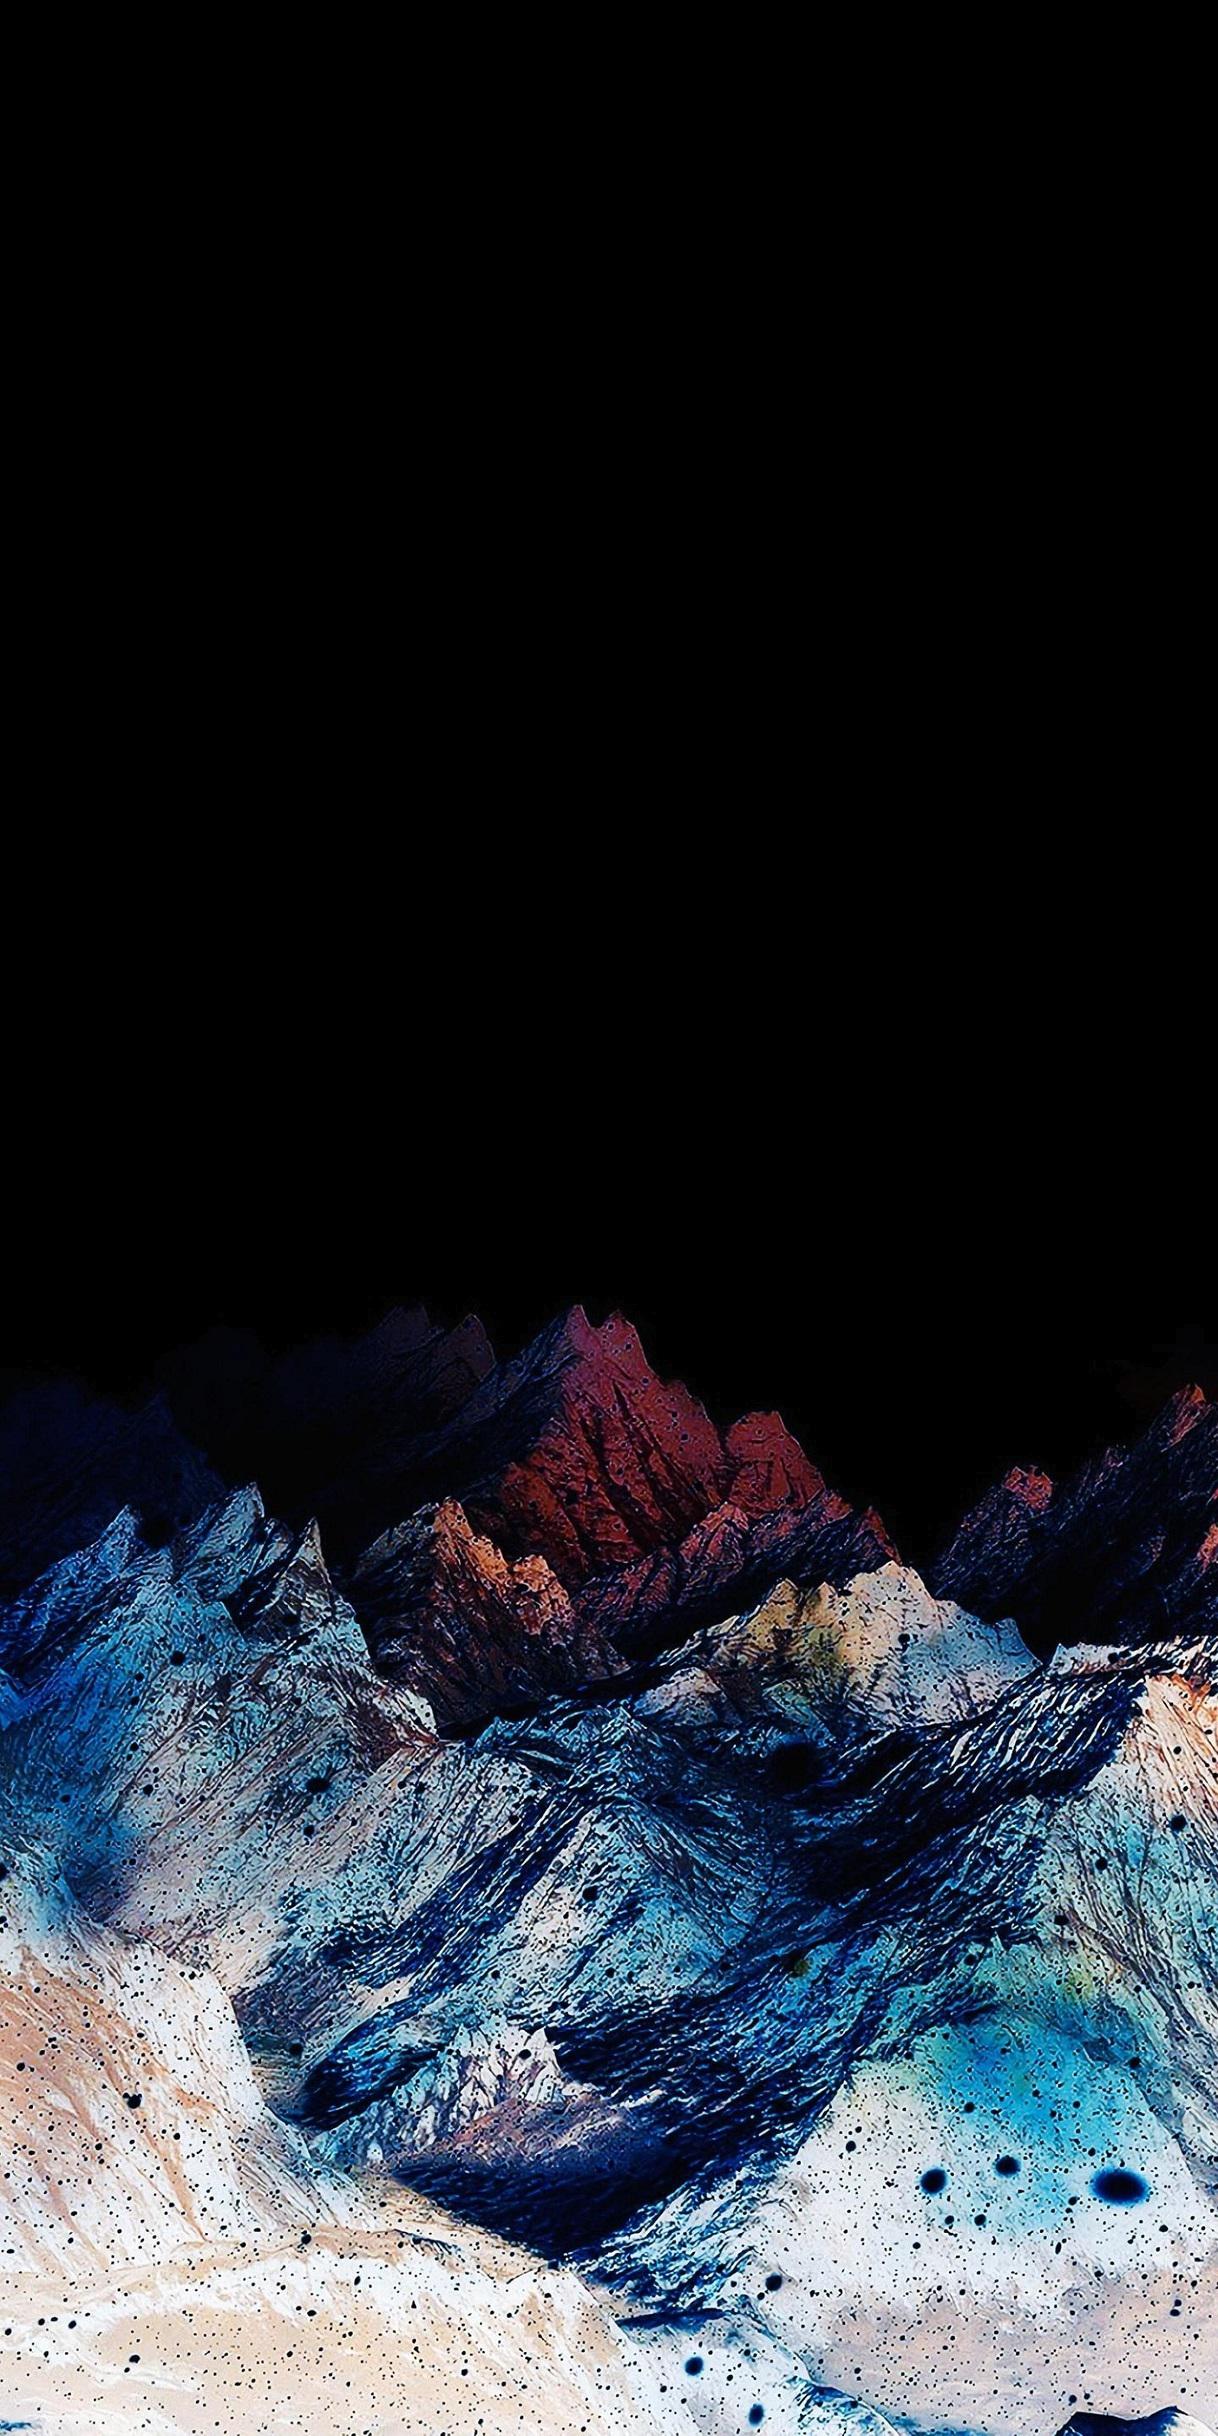 OLED-wallpaper-idownloadblog-colorful-mountain